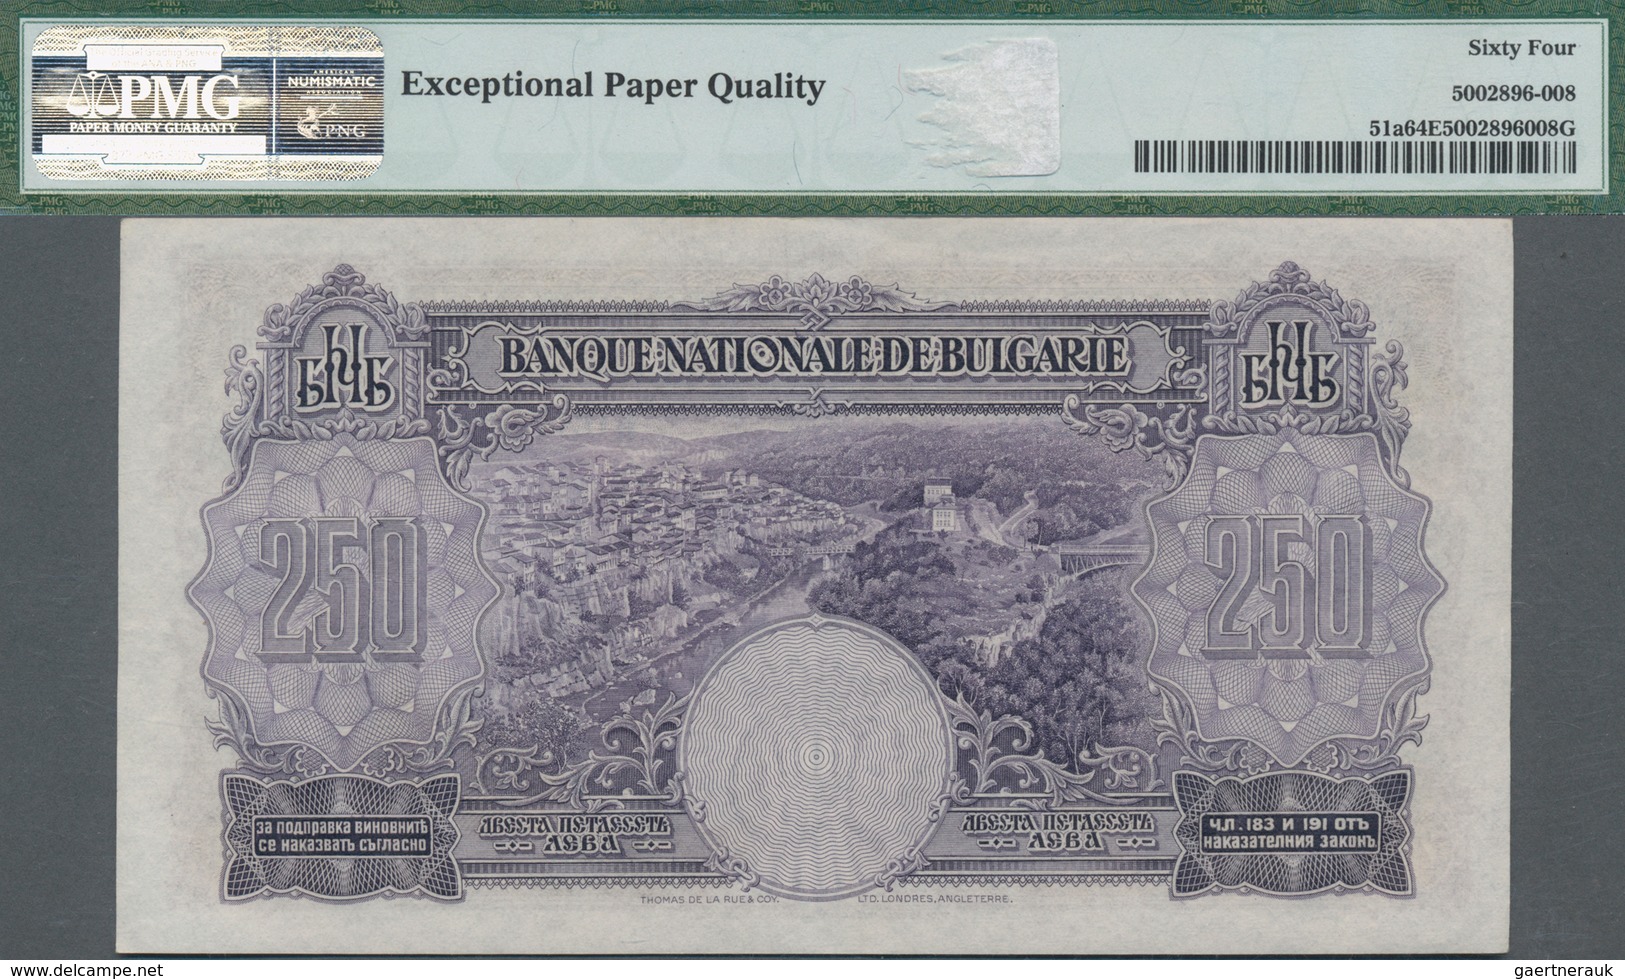 Bulgaria / Bulgarien: National Bank Of Bulgaria 250 Leva 1929, P.51a, Great Original Shape And PMG G - Bulgaria